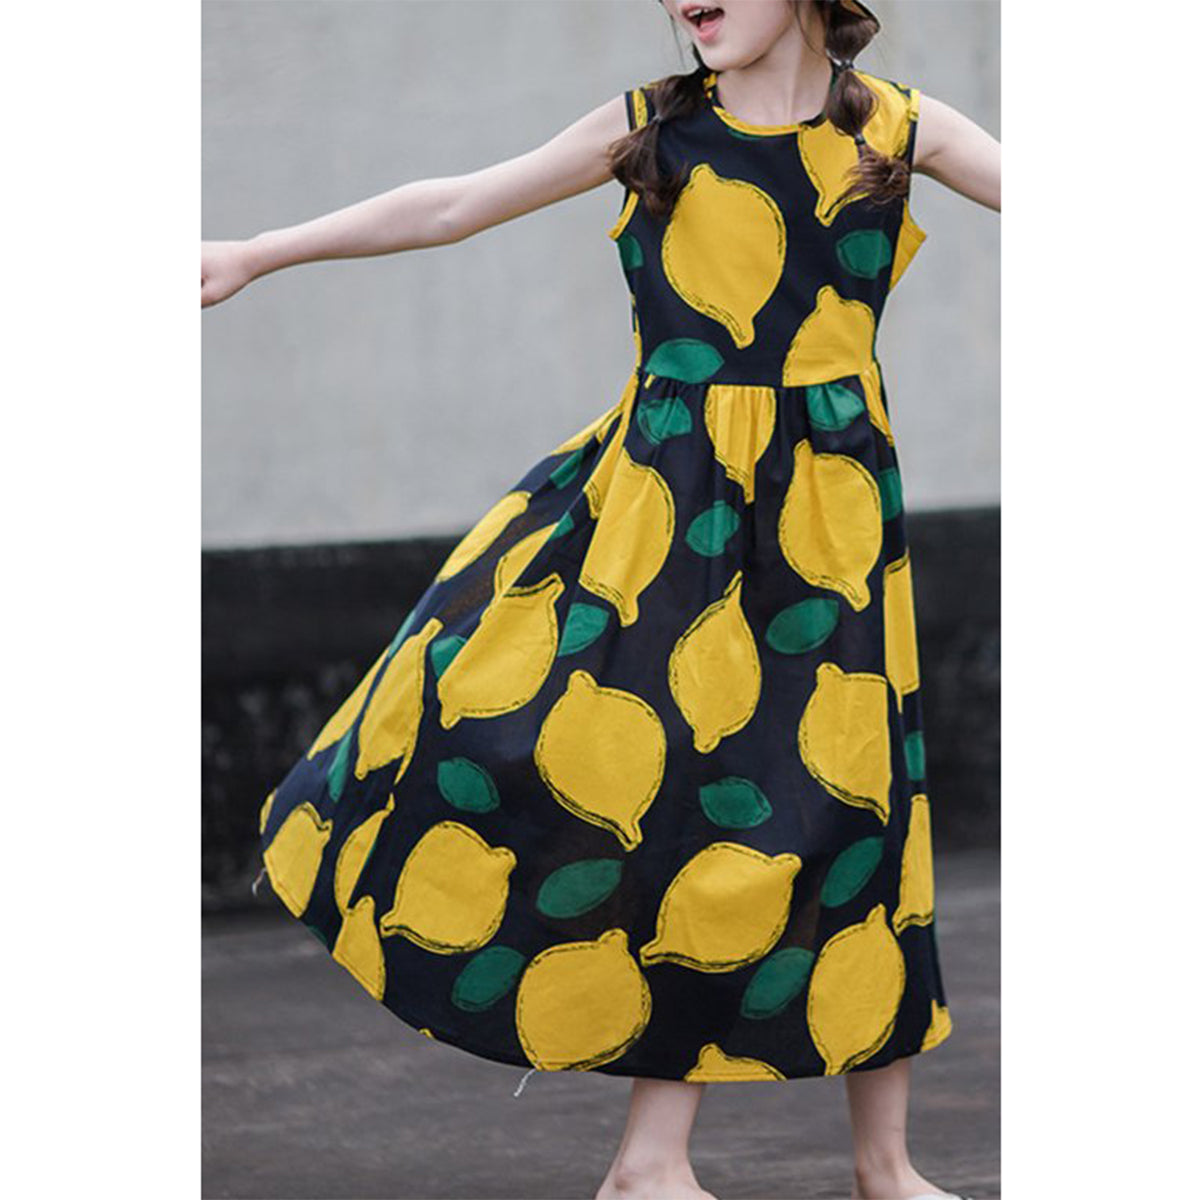 BabyGirl's Stylish Yellow Lemon & Black Lemon Tunic Dresses_Frocks Combo for Kids.